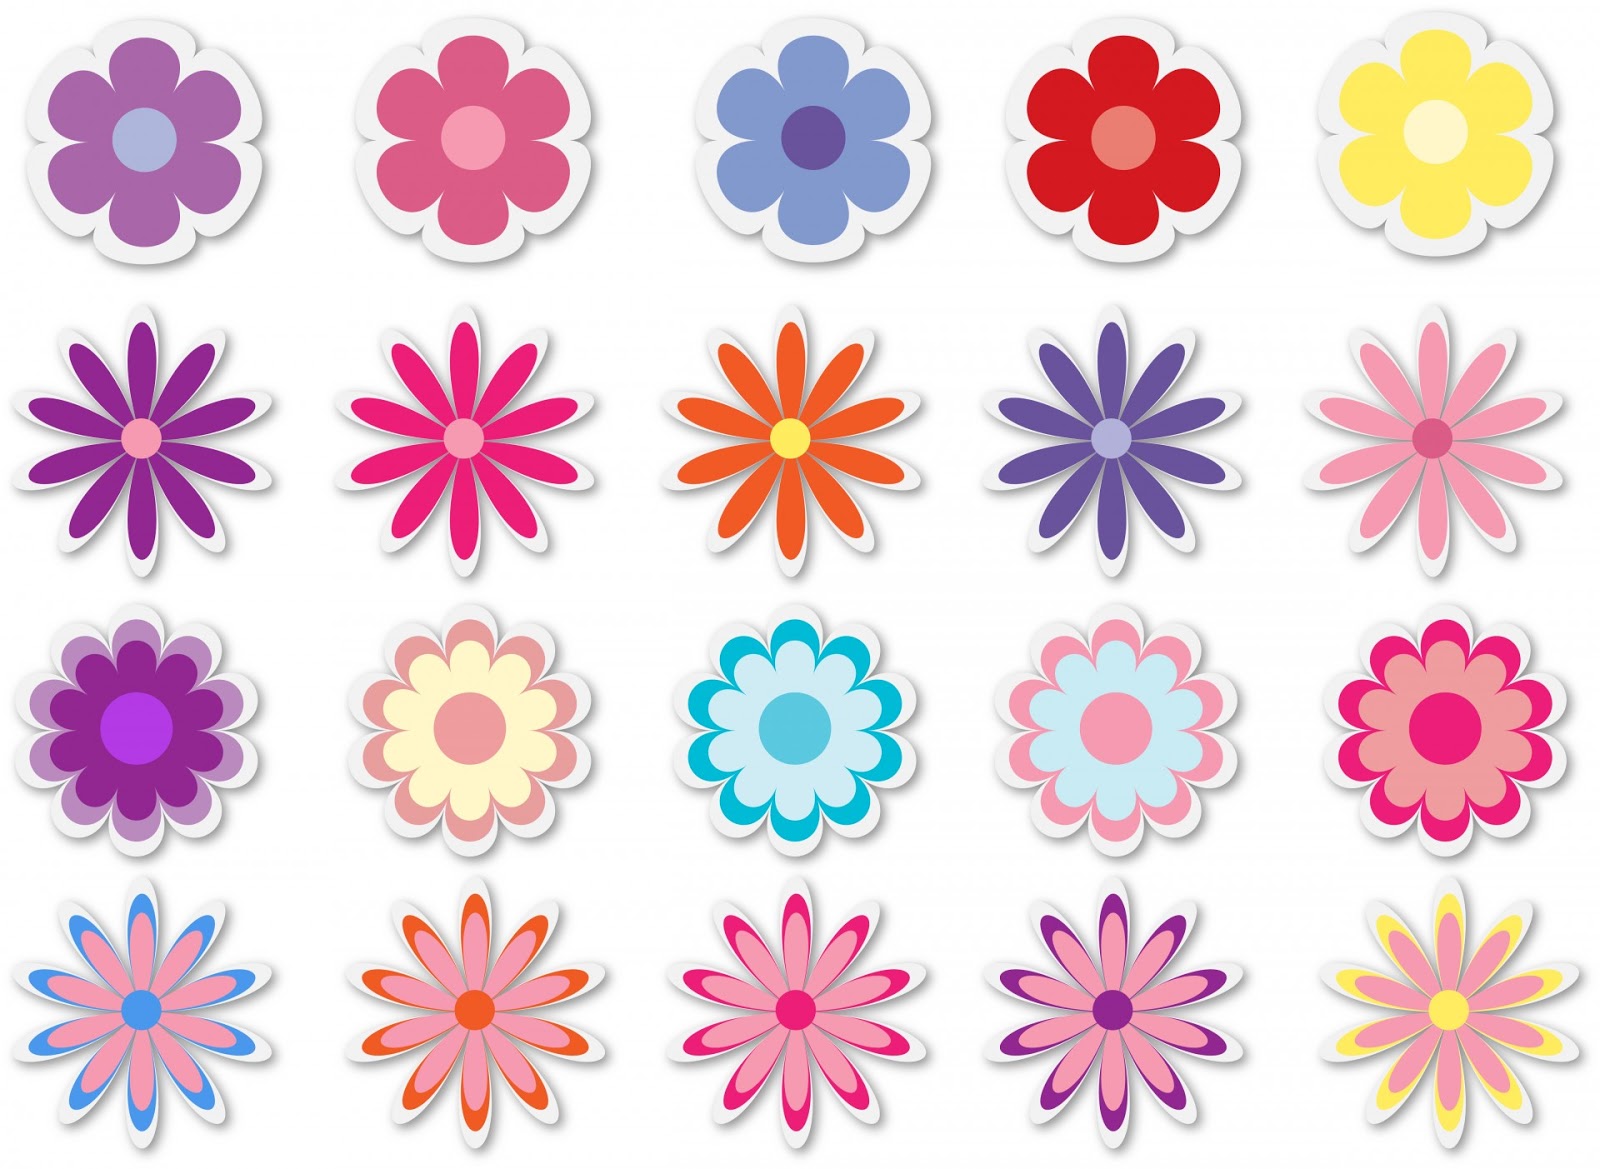 Reward Flower Stickers by public domain pictures.